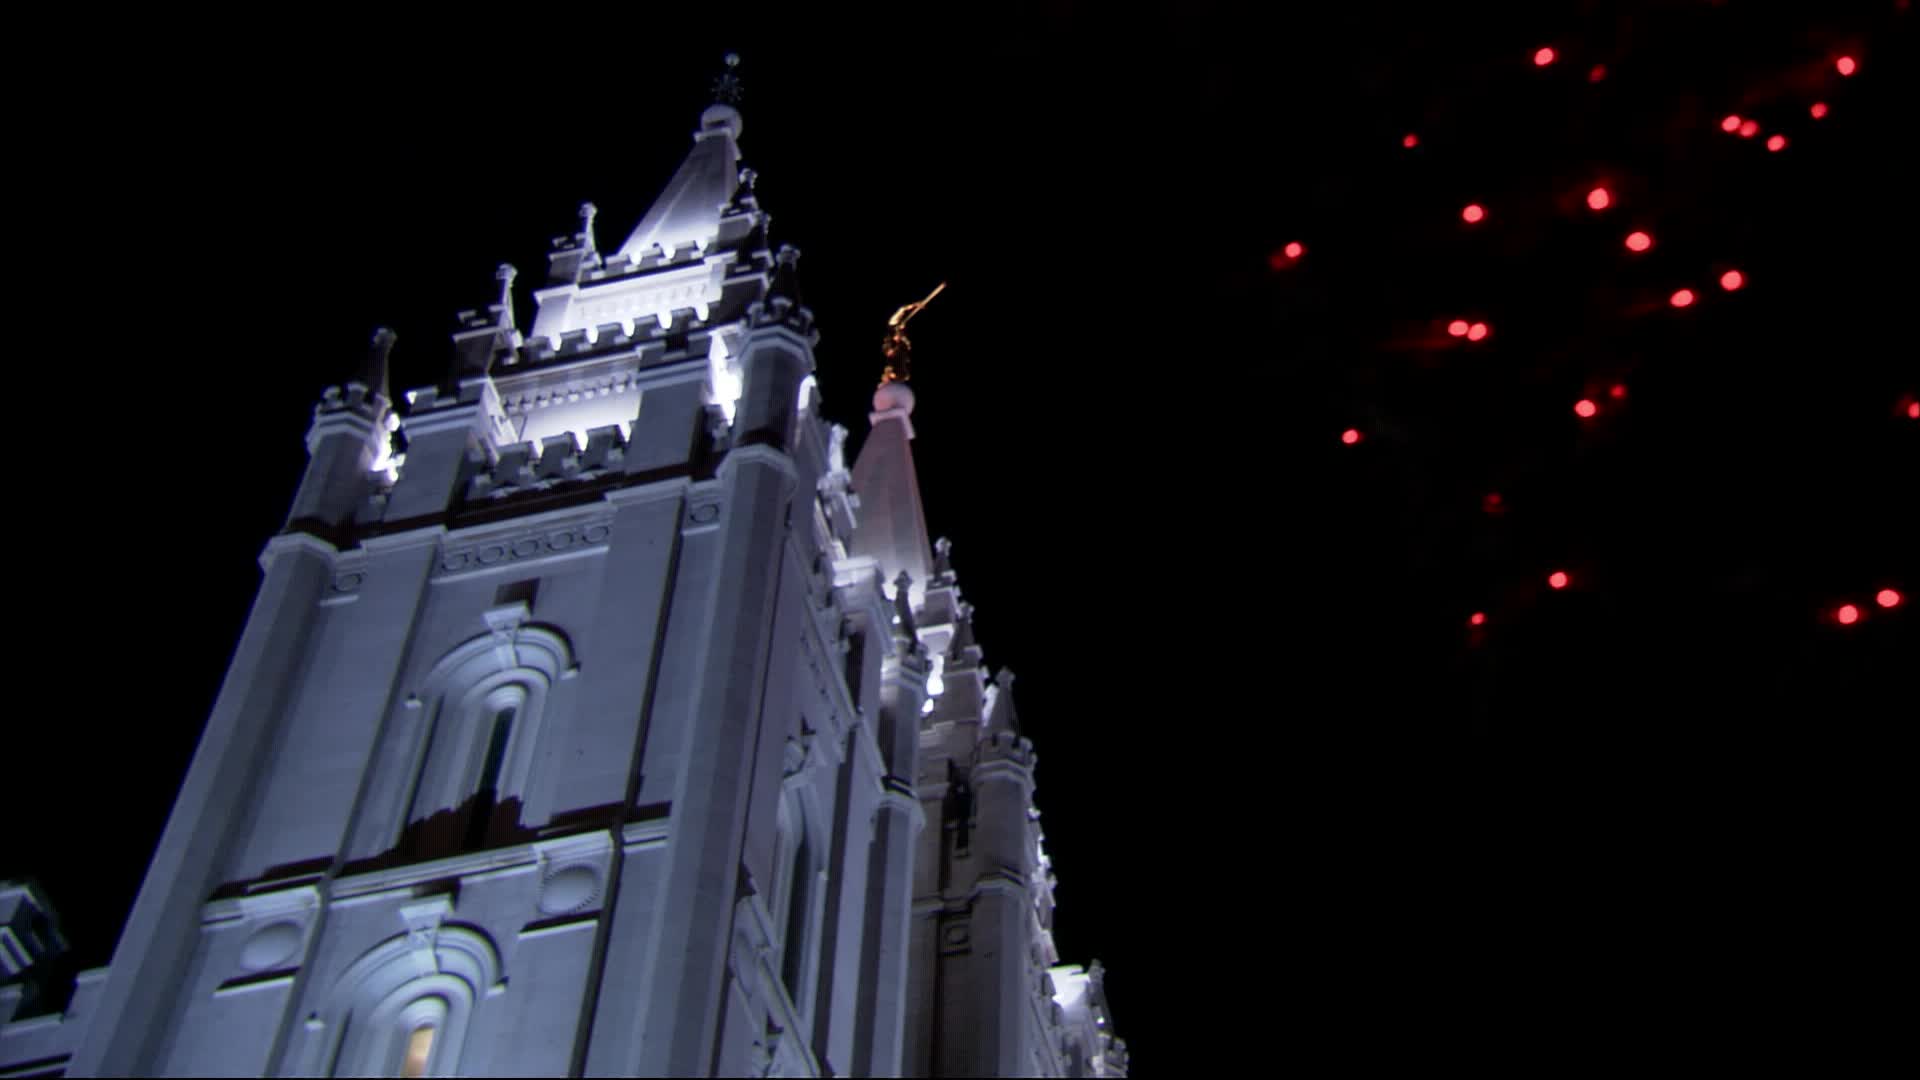 The Salt Lake Temple at night with Christmas lights